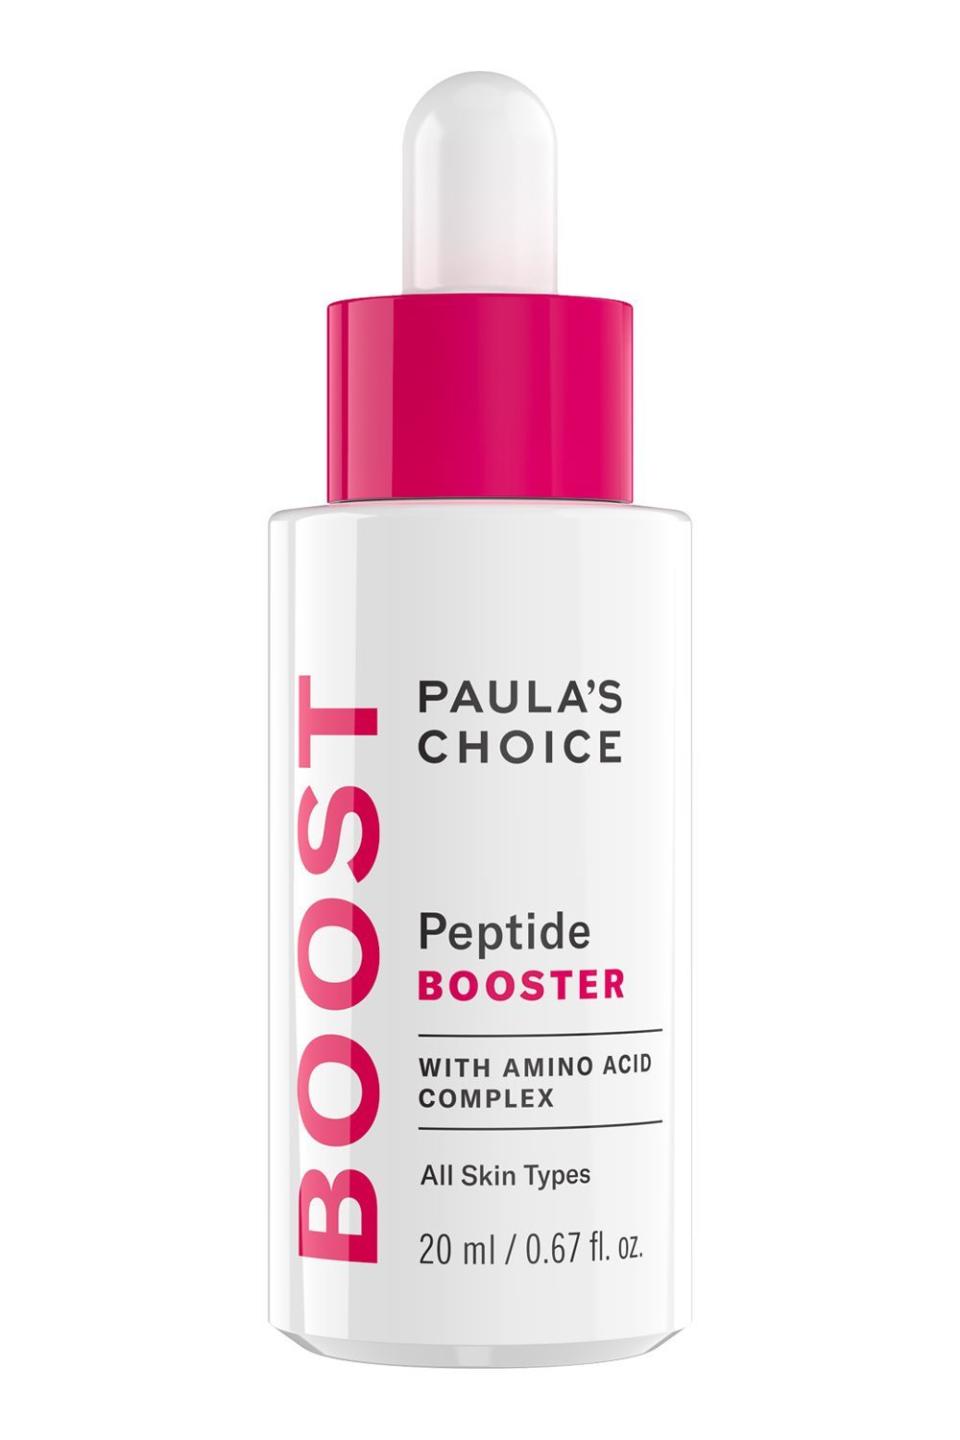 8) Paula's Choice Peptide Booster Serum